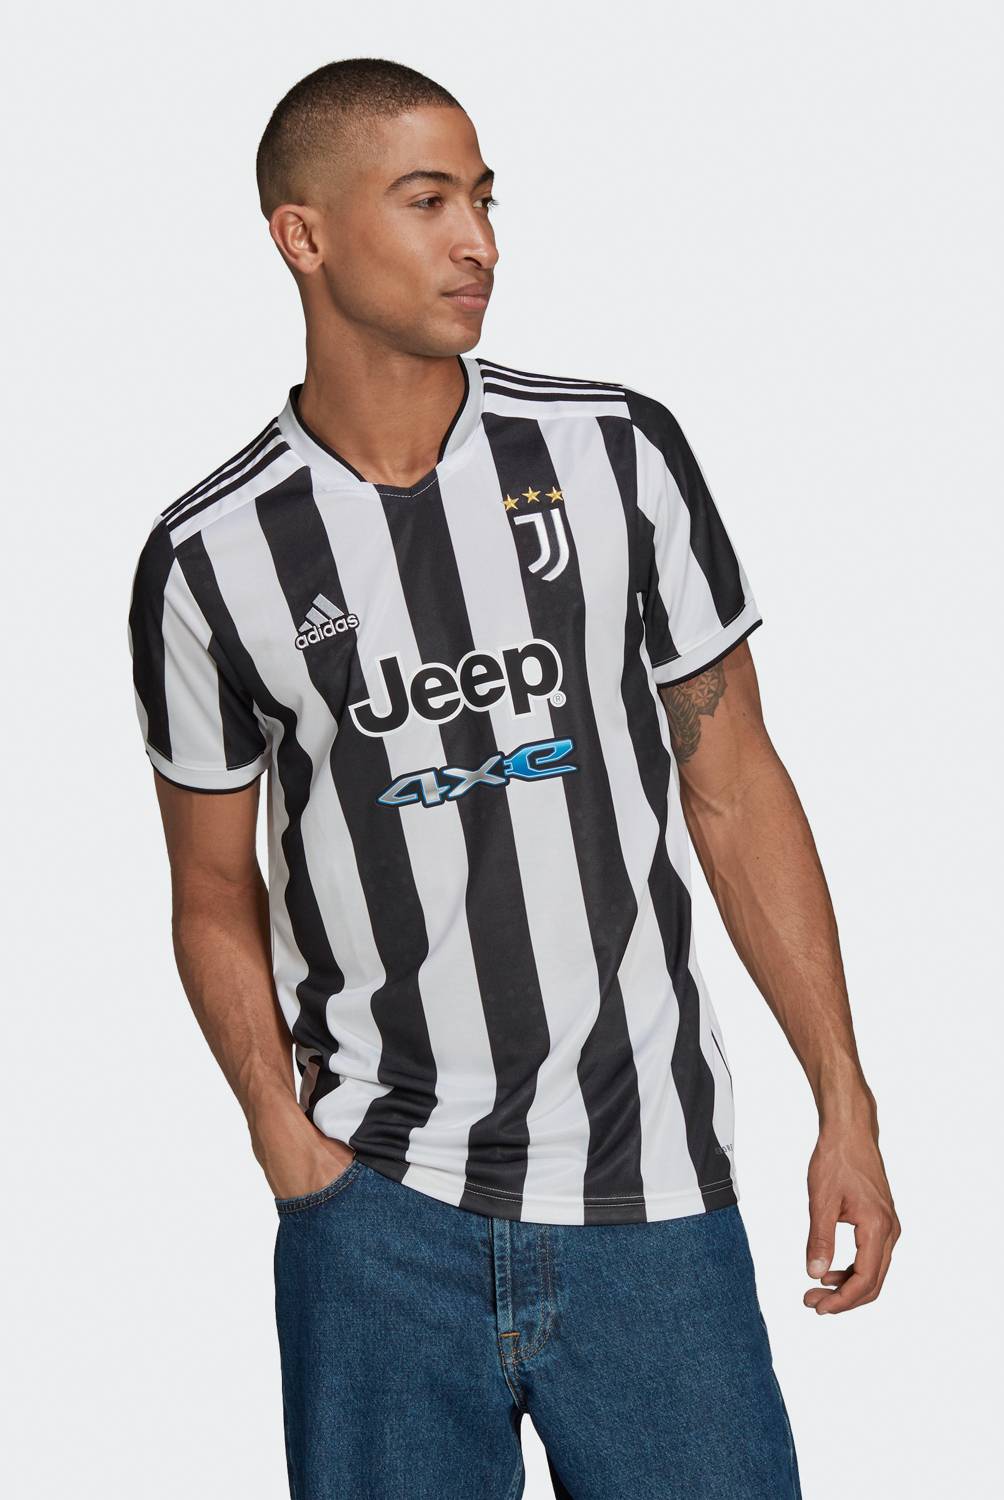 ADIDAS - Adidas Camiseta de Fútbol Juventus Local Hombre